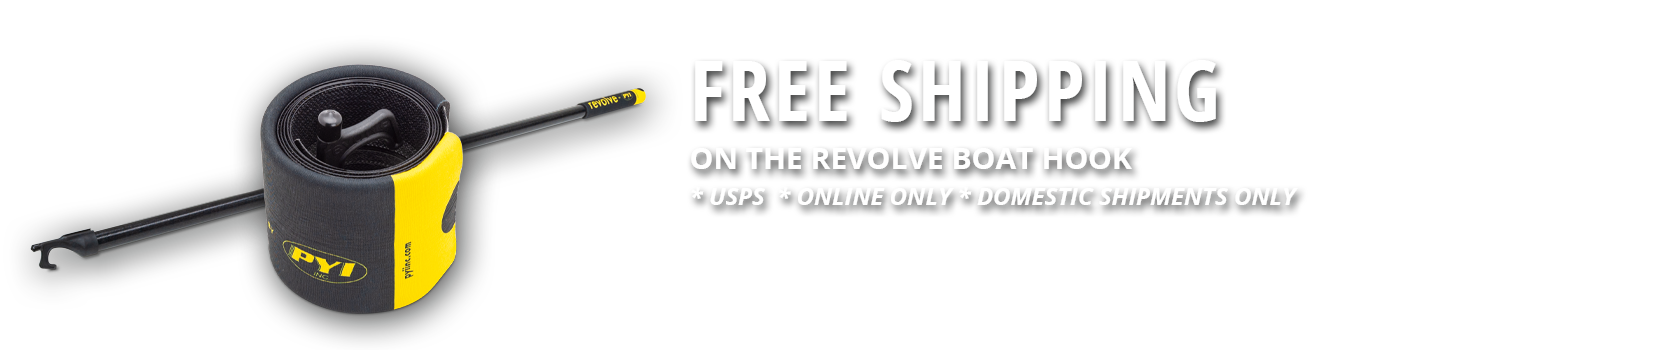 Revolve Boat Hook Free Shipping